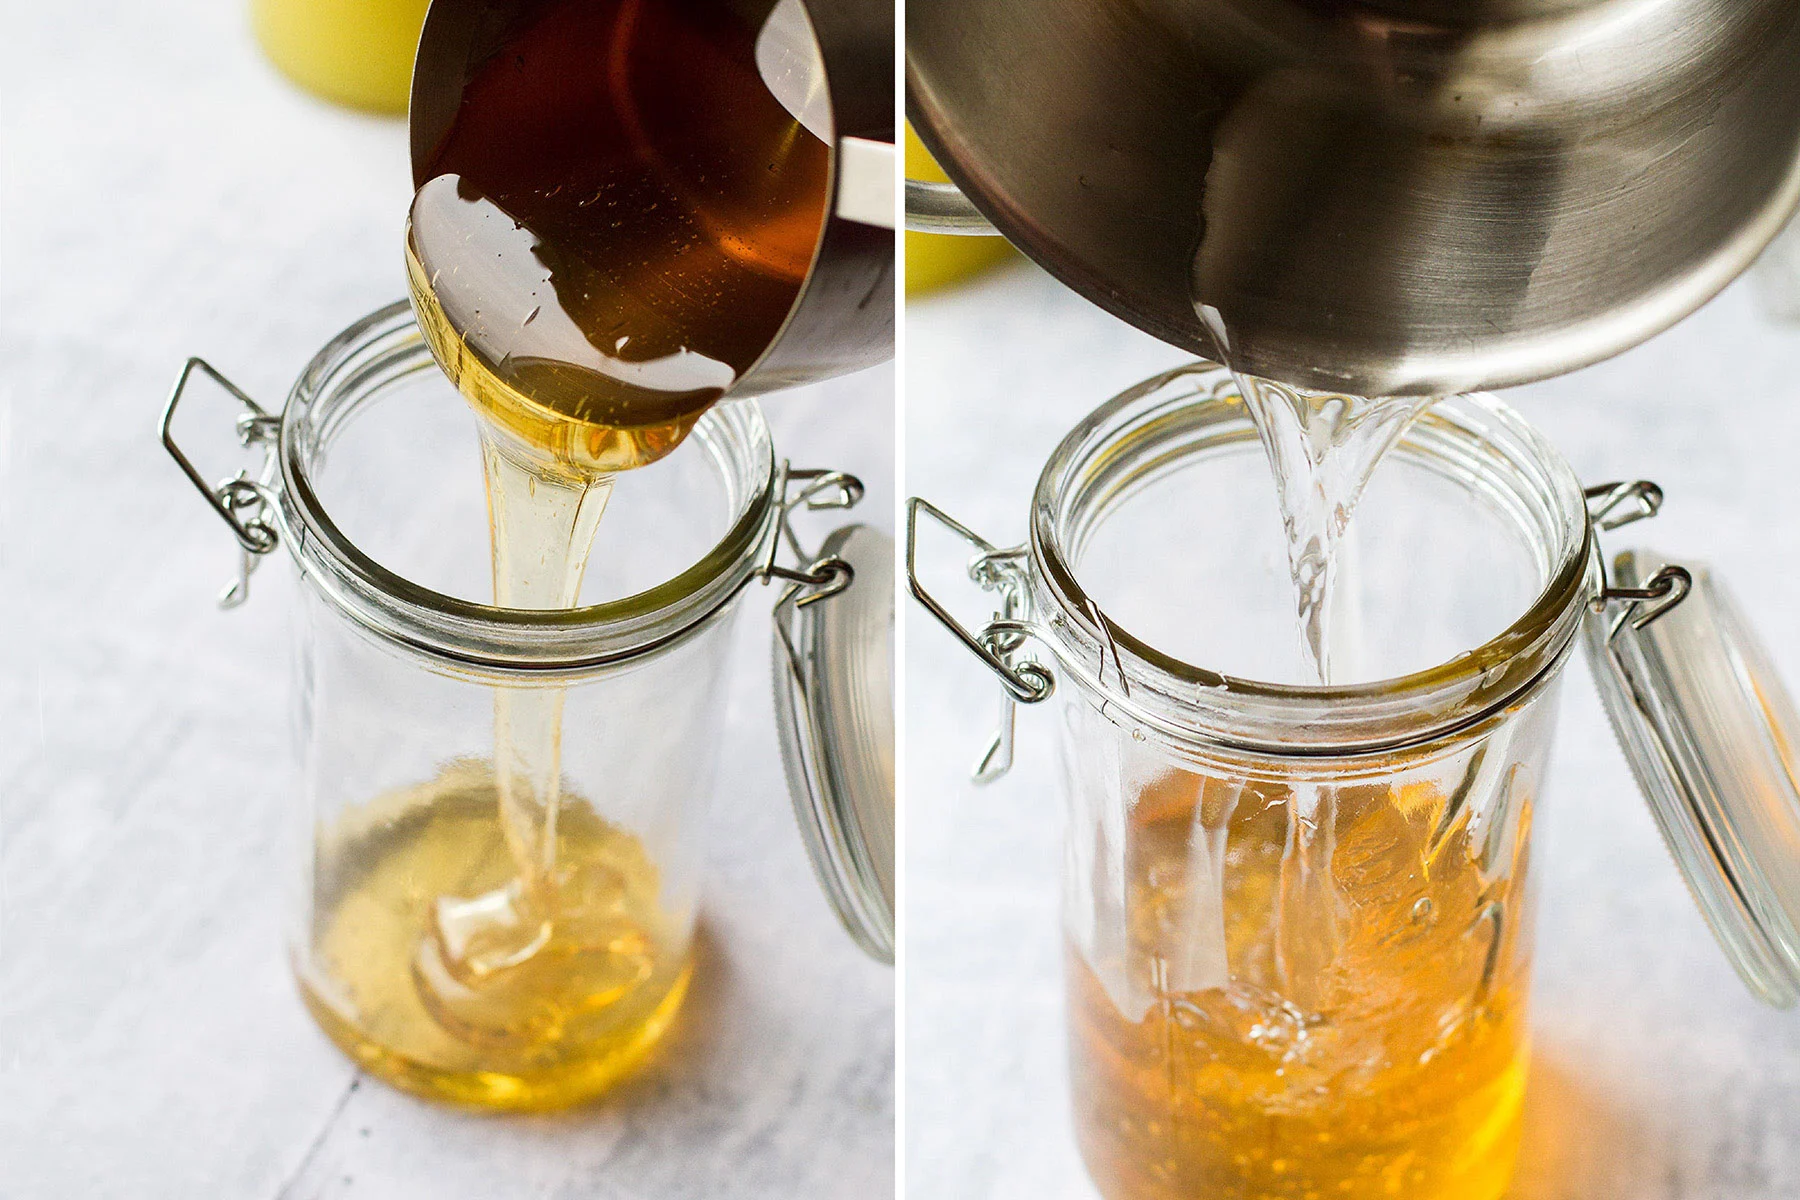 Steps to make honey syrup.